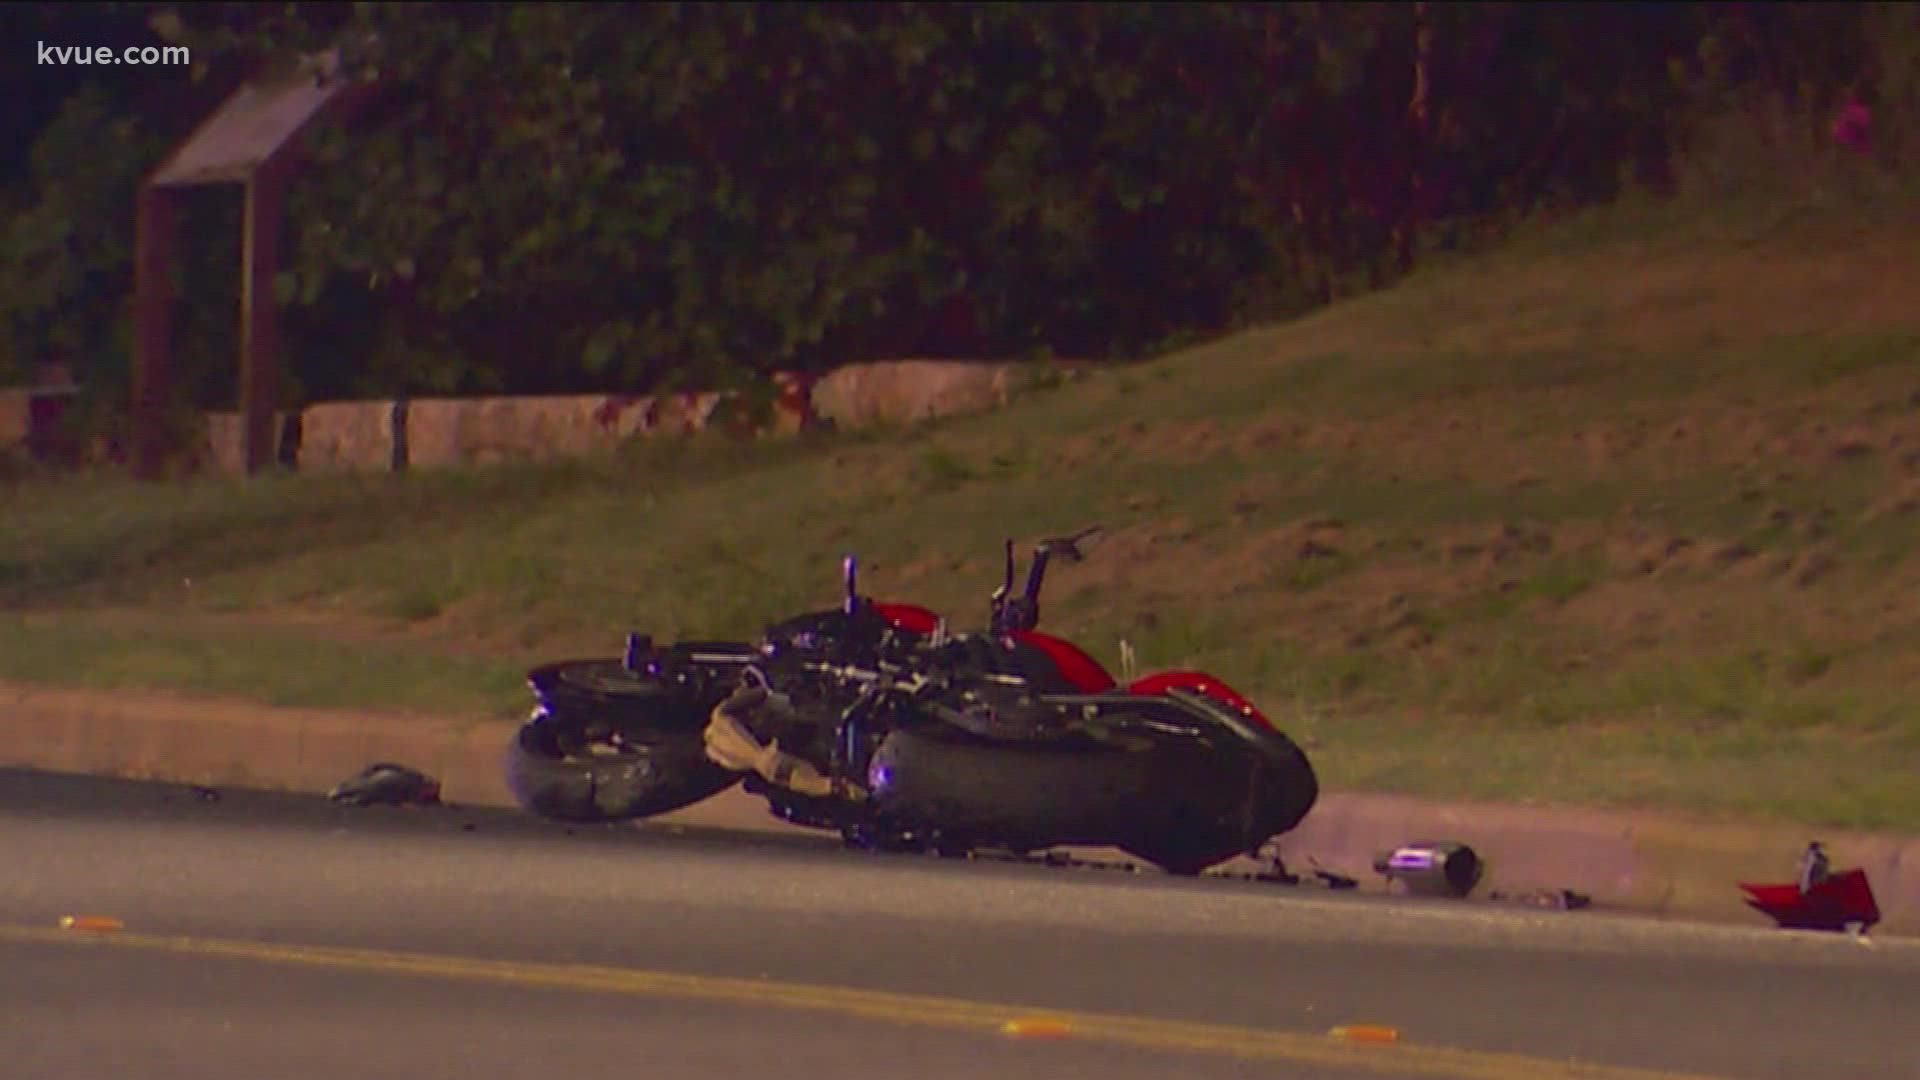 Motorcyclist killed in Central Austin crash